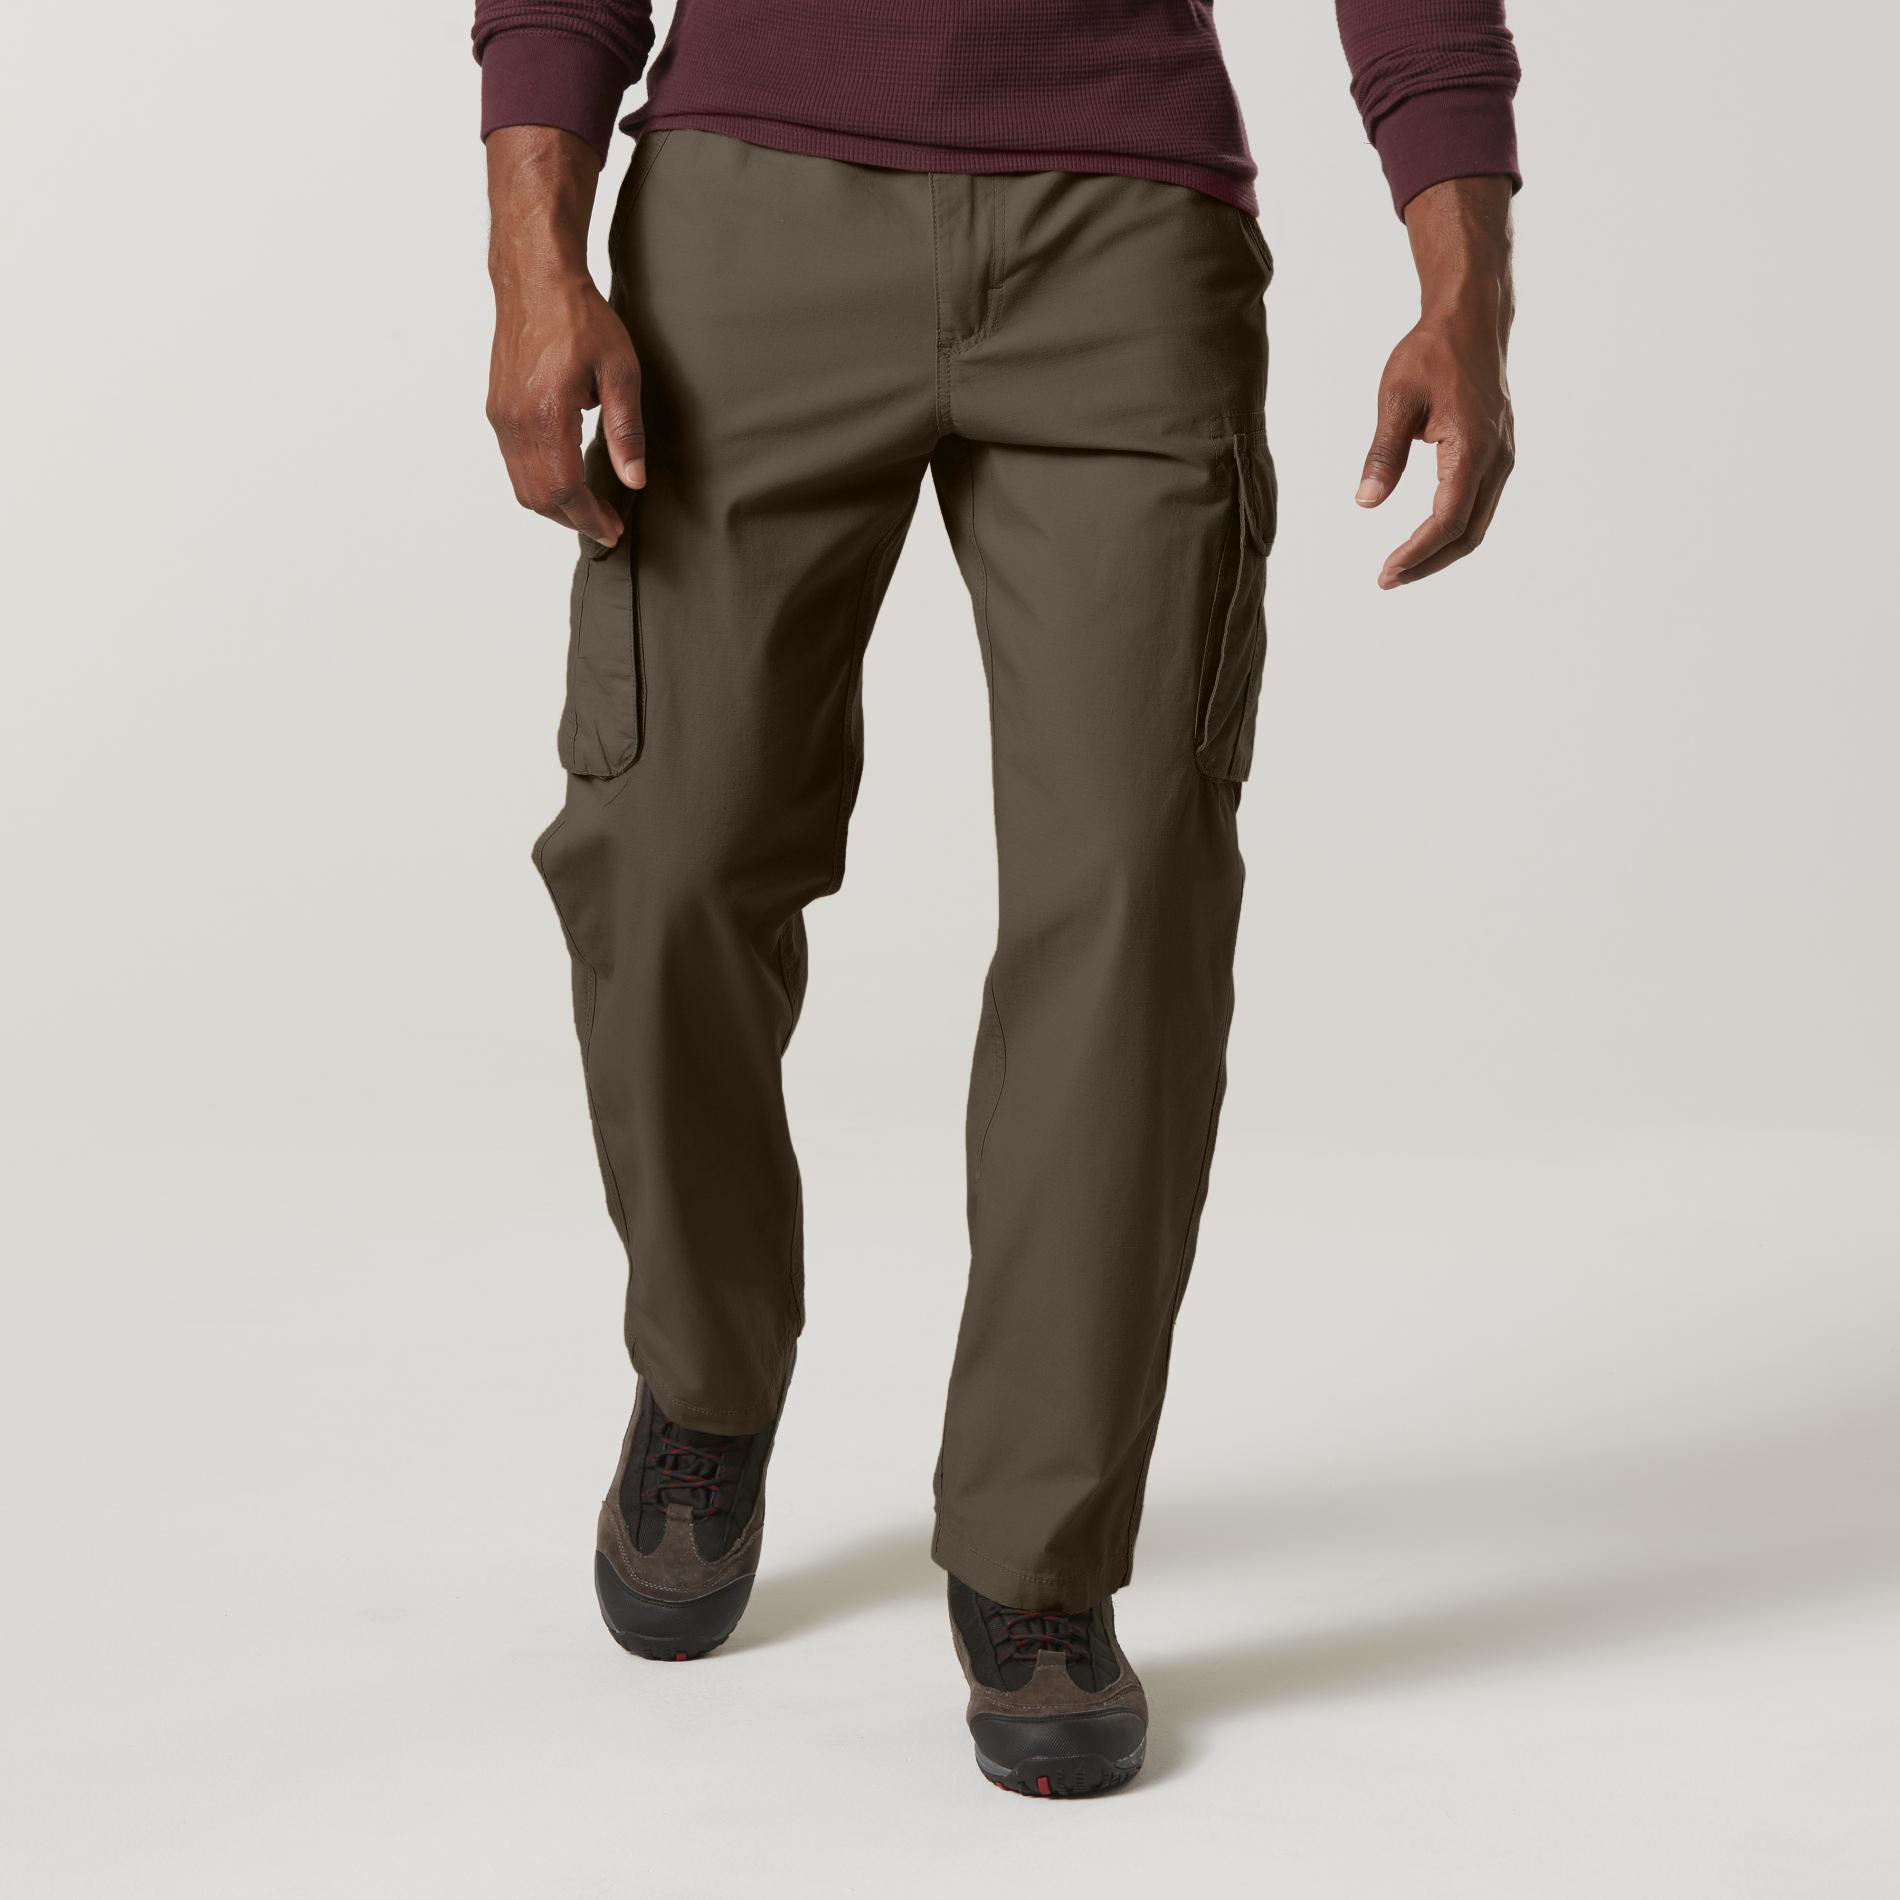 Outdoor Life Men's Cargo Pants | Shop Your Way: Online Shopping & Earn ...